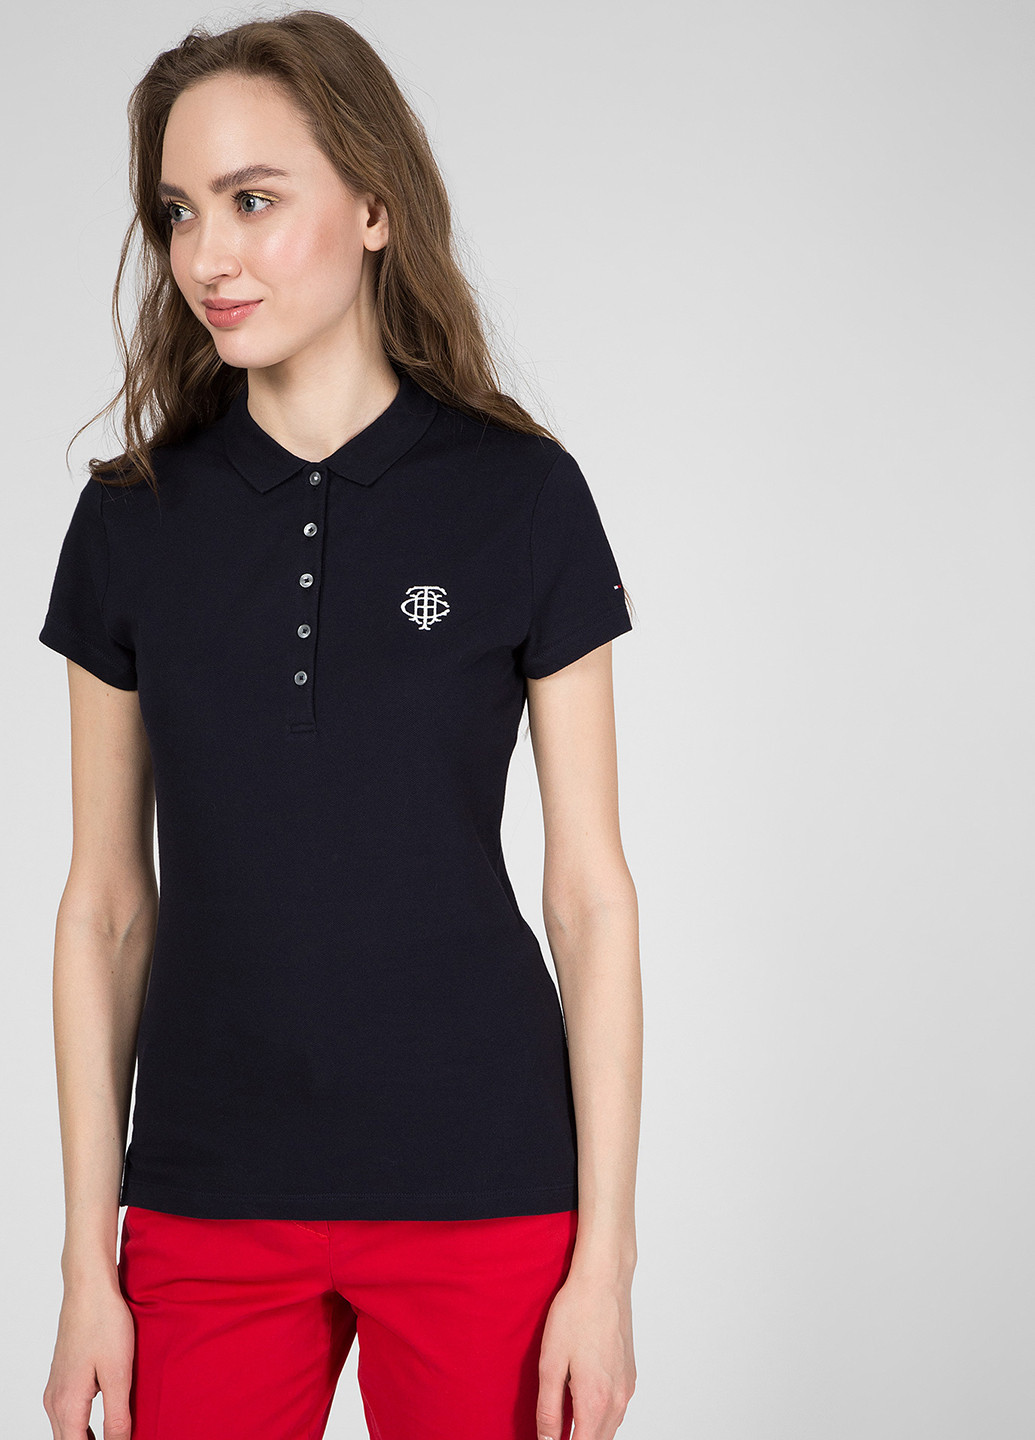 Темно-синяя женская футболка-поло Tommy Hilfiger с логотипом